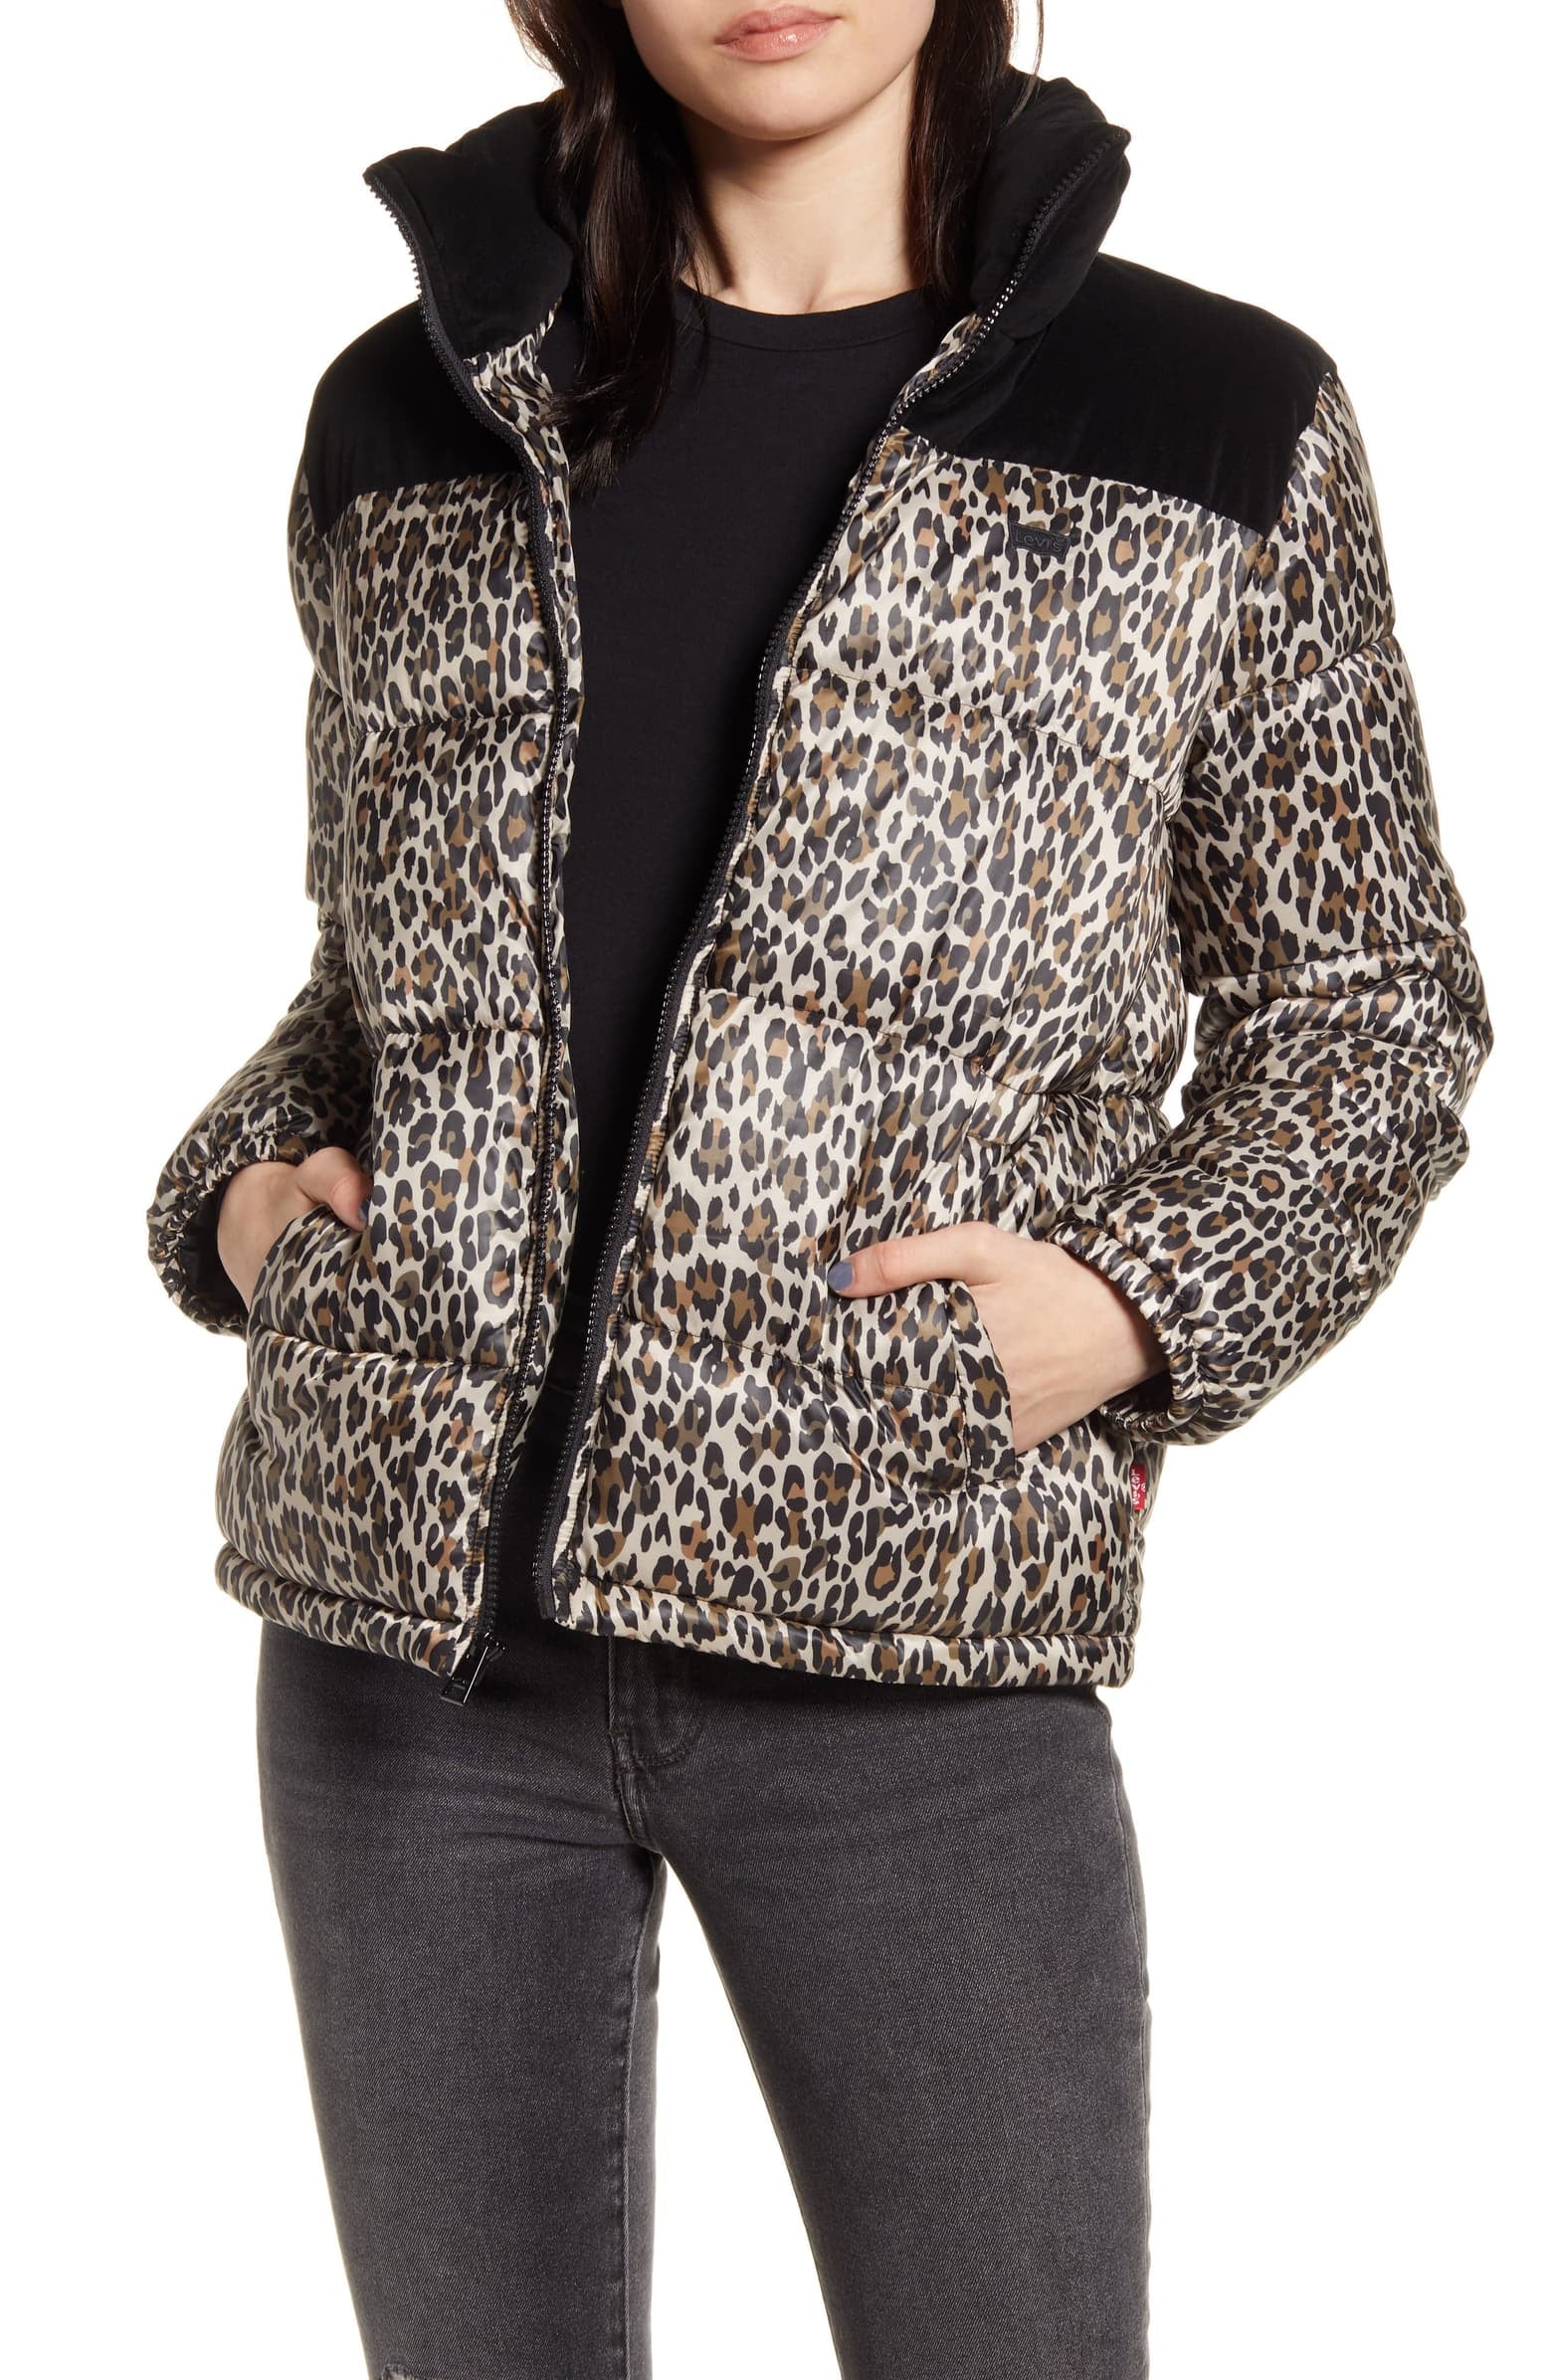 leopard print puffer jacket